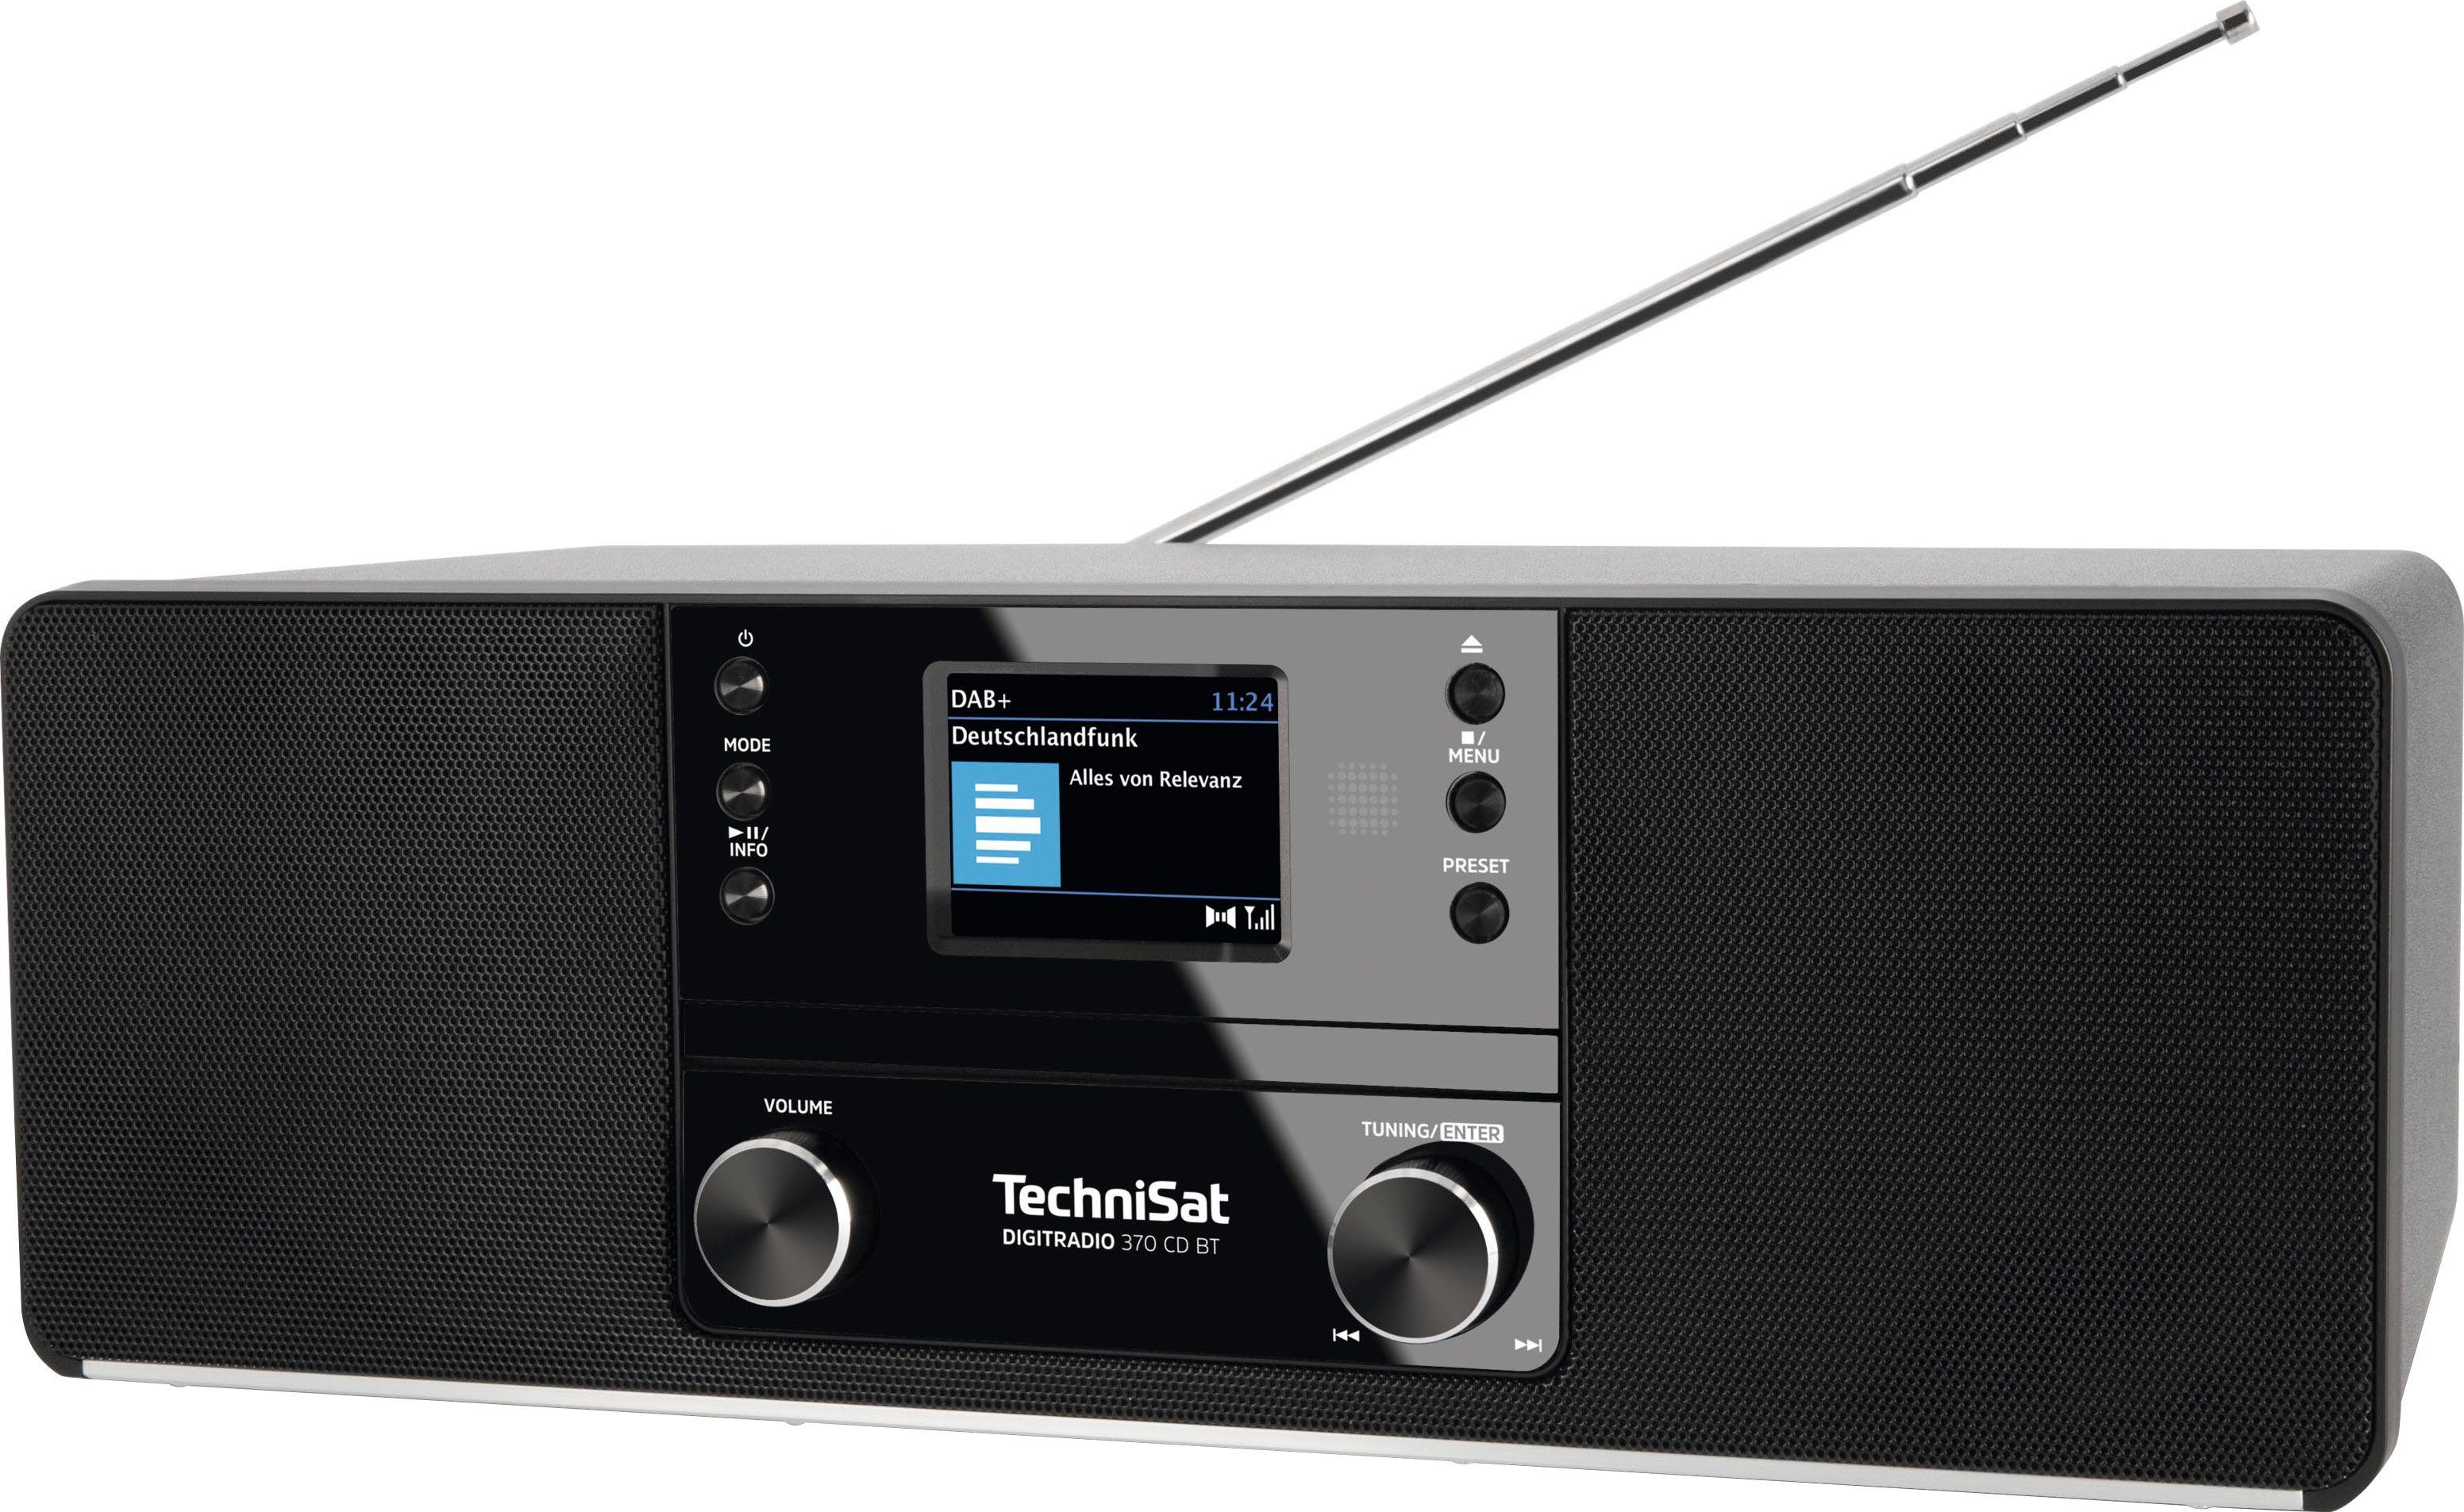 BT RDS, schwarz (DAB) TechniSat (DAB), (Digitalradio 10 DIGITRADIO CD W) 370 Digitalradio UKW mit